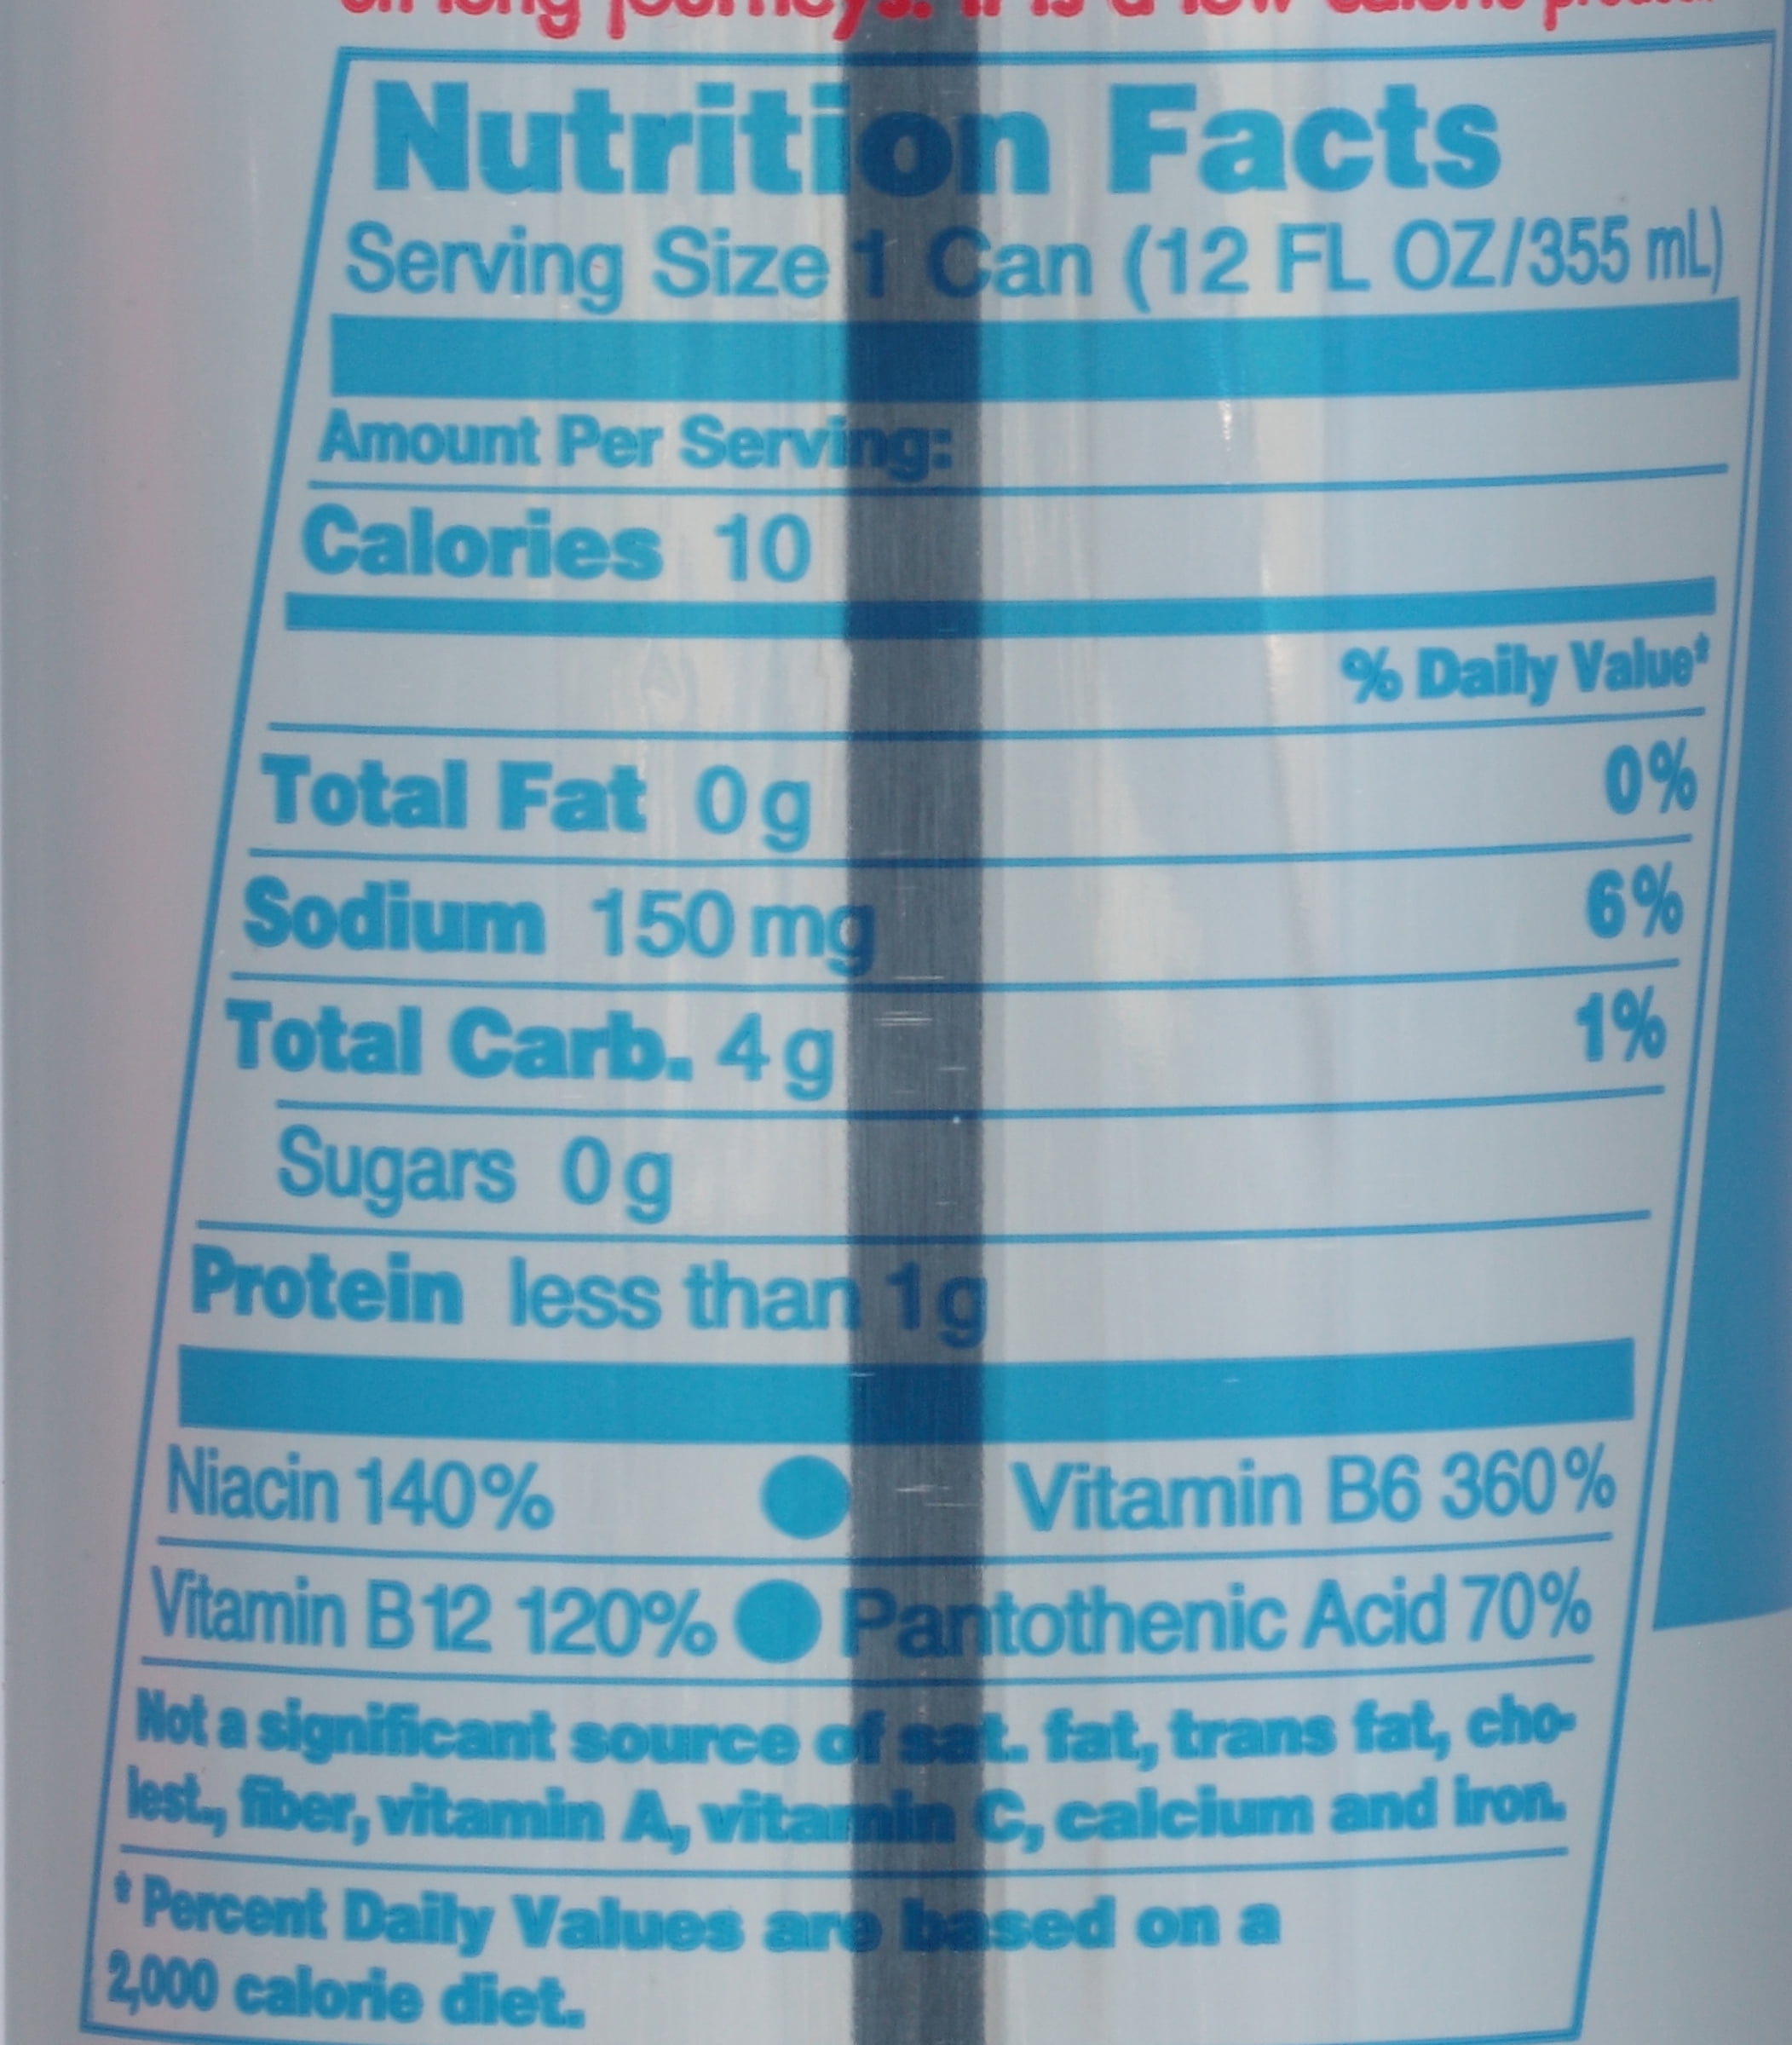 Red Bull Nutrition Facts Sugar Free | Besto Blog